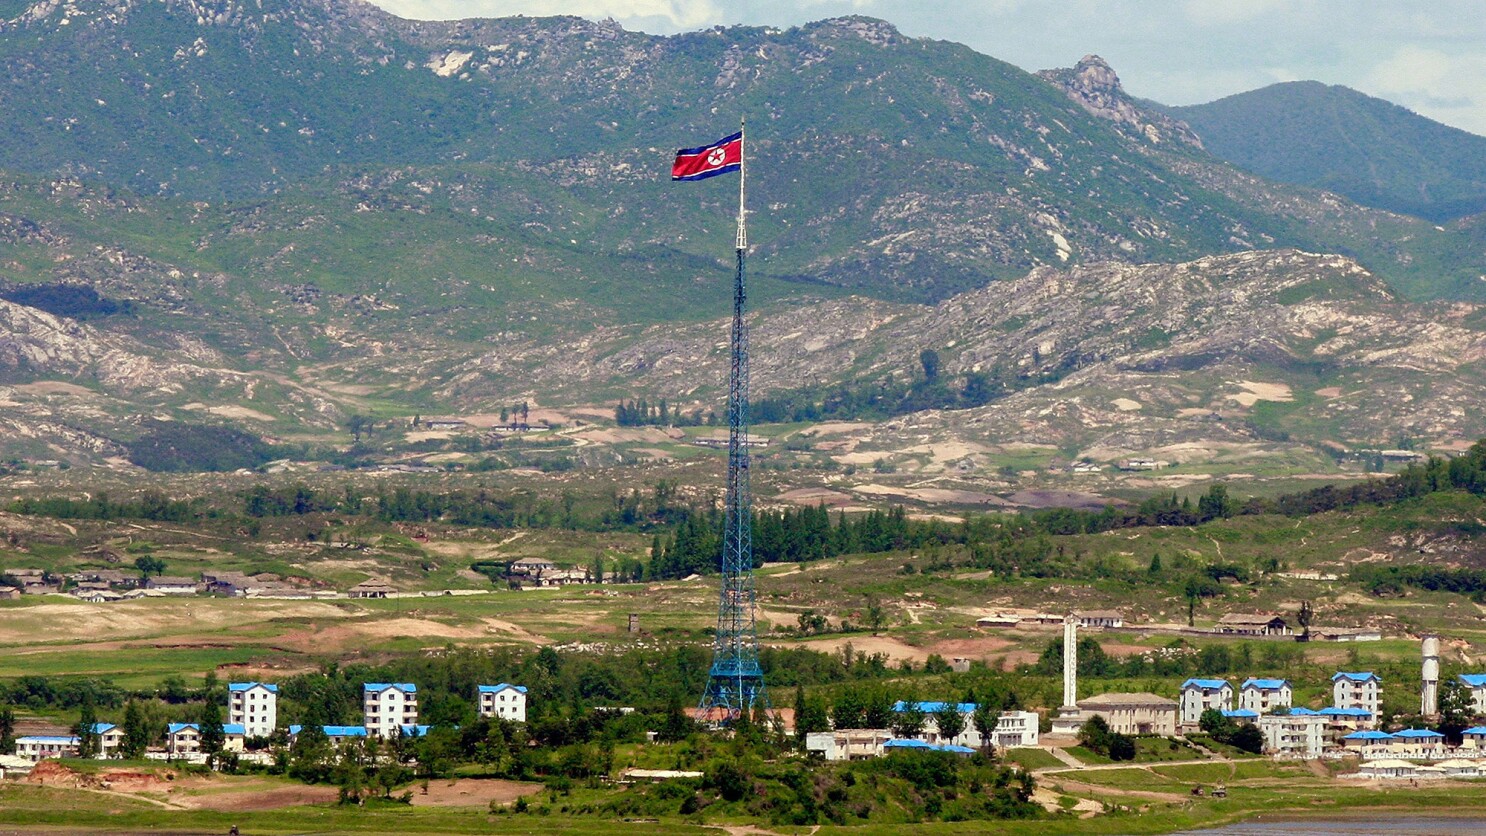 Download North Korea City Images Images